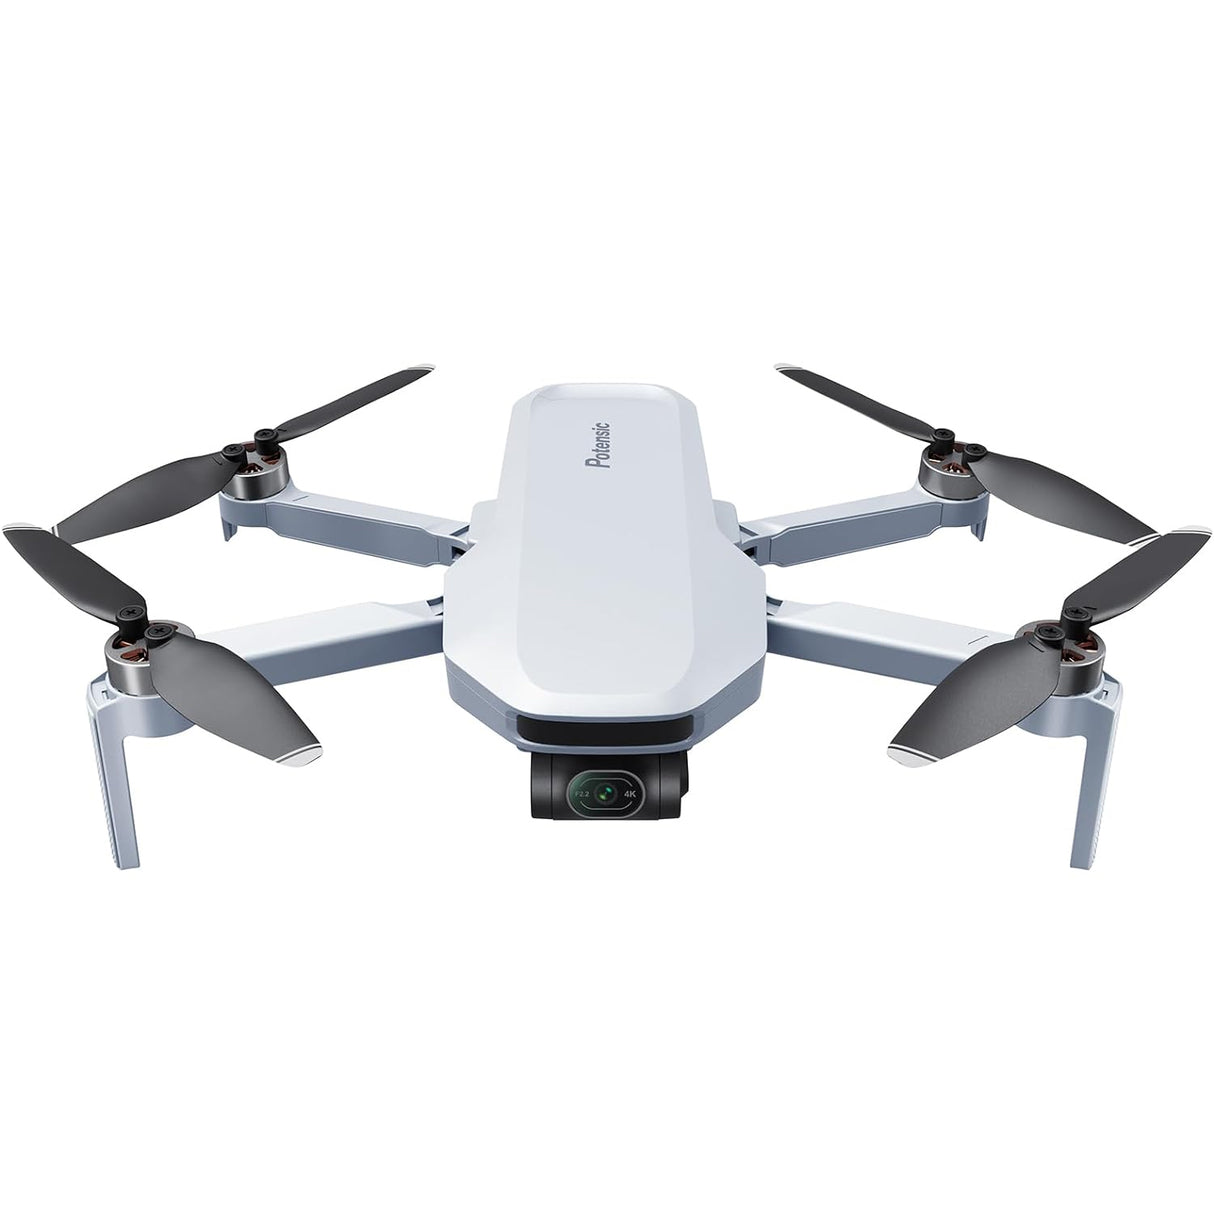 Drone GPS ATOM 4K avec cardan 3 axes, transmission vidéo 6 km, suivi visuel